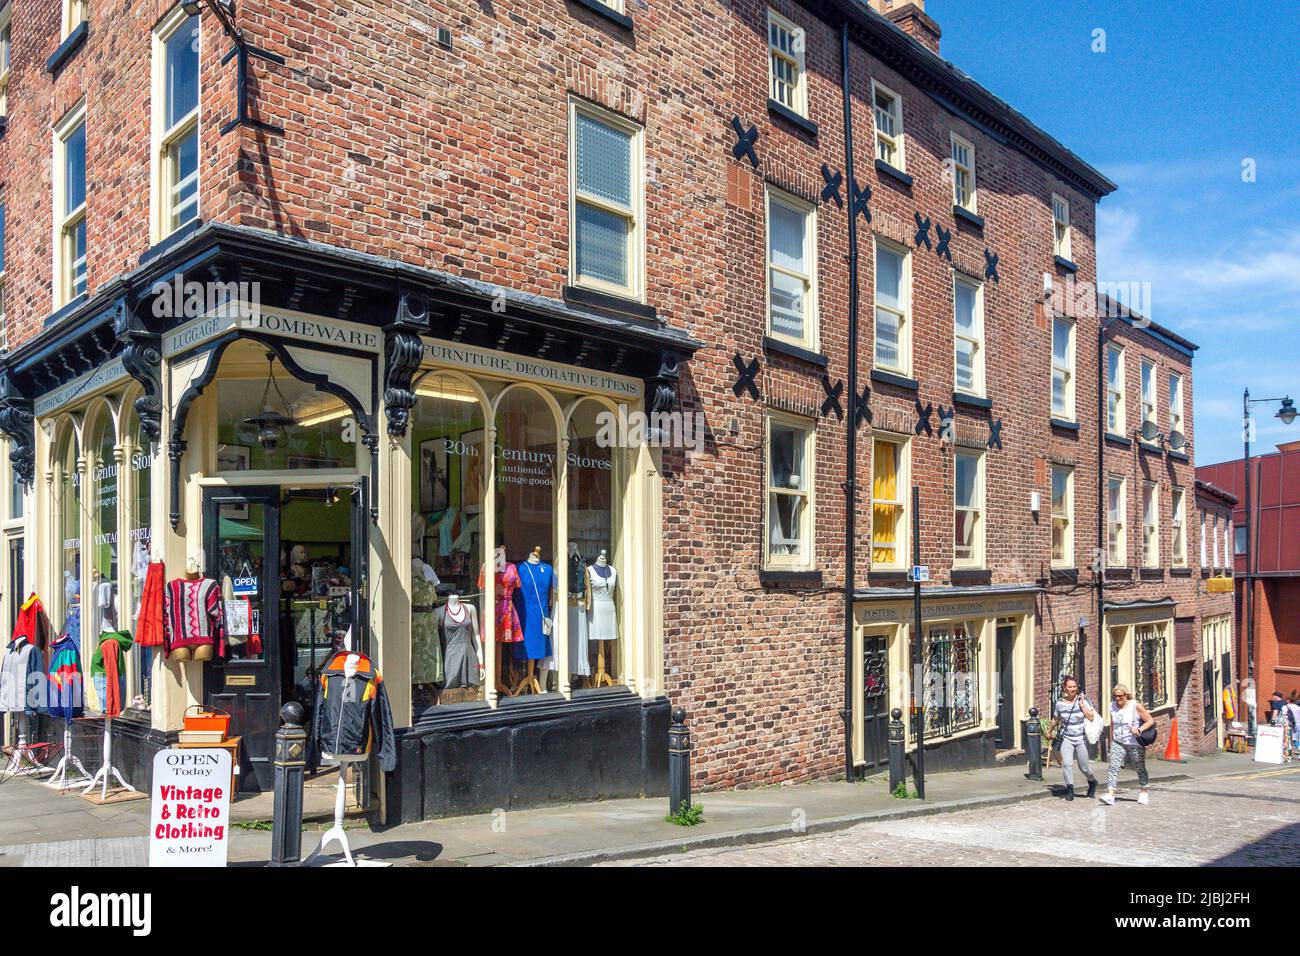 Vintage & Retro Clothing Store, Market Place, Stockport, Greater Manchester, England, United Kingdom Stock Photo